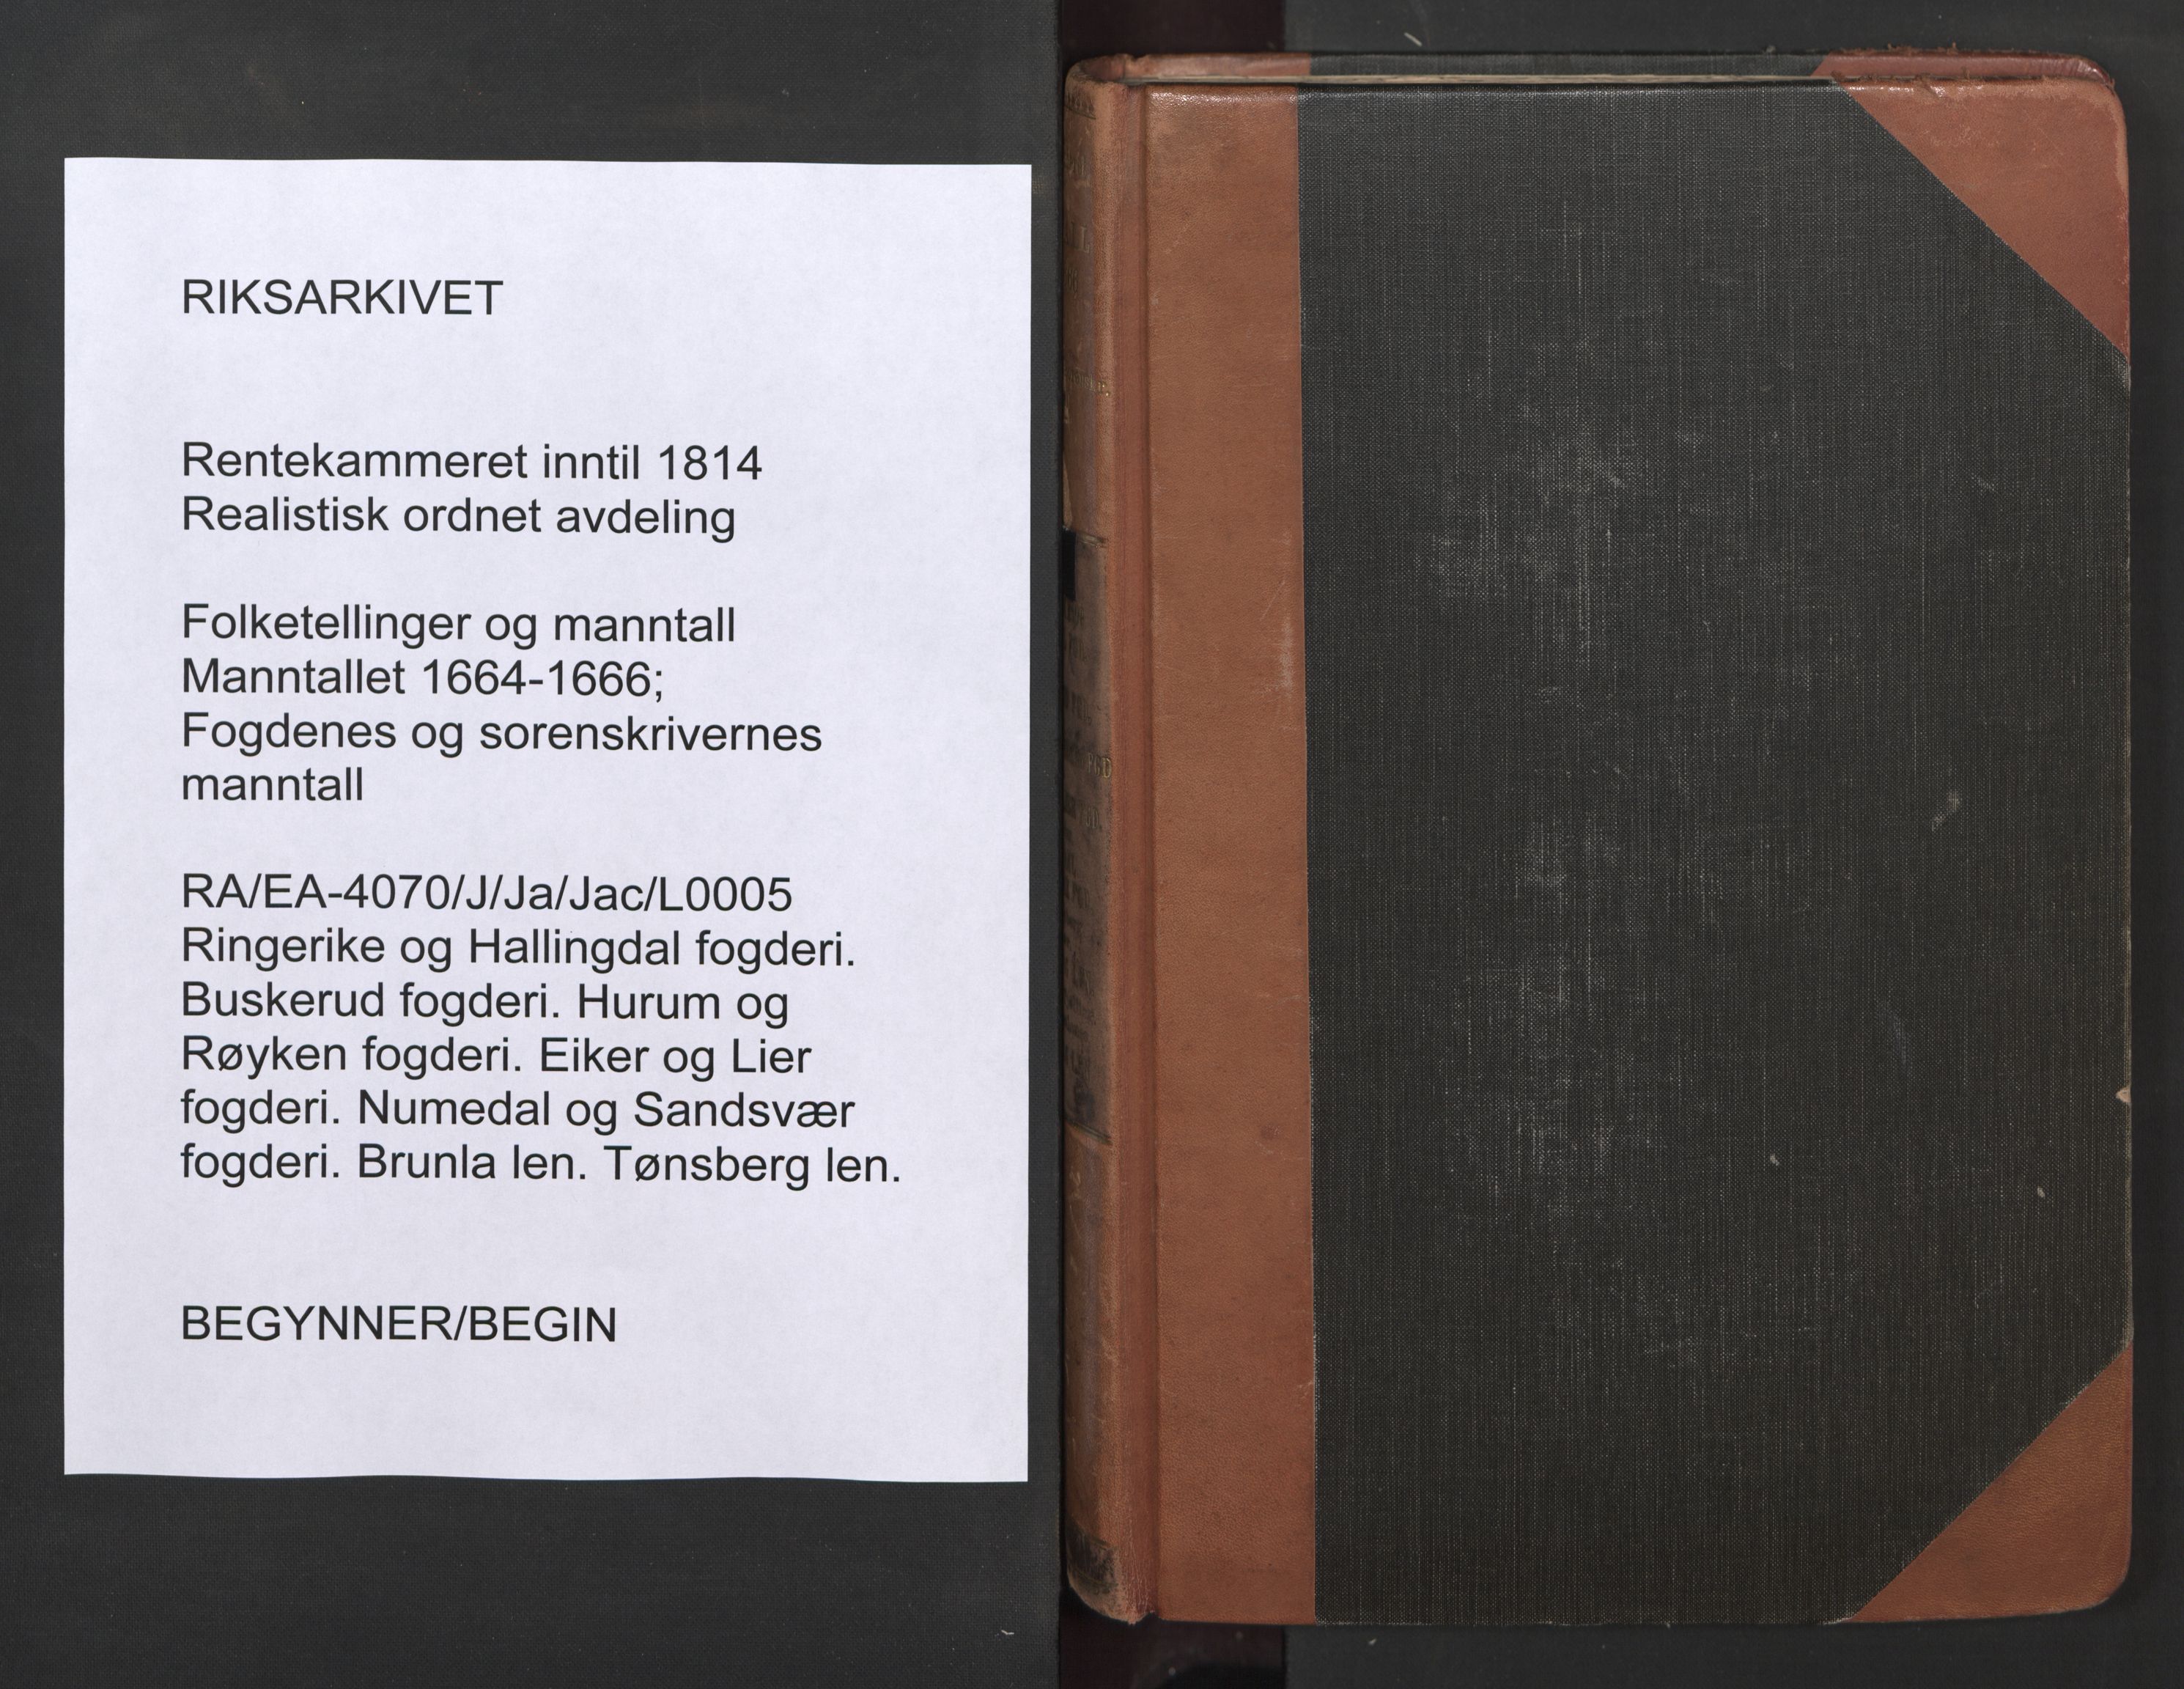 RA, Fogdenes og sorenskrivernes manntall 1664-1666, nr. 5: Fogderier (len og skipreider) i nåværende Buskerud fylke og Vestfold fylke, 1664